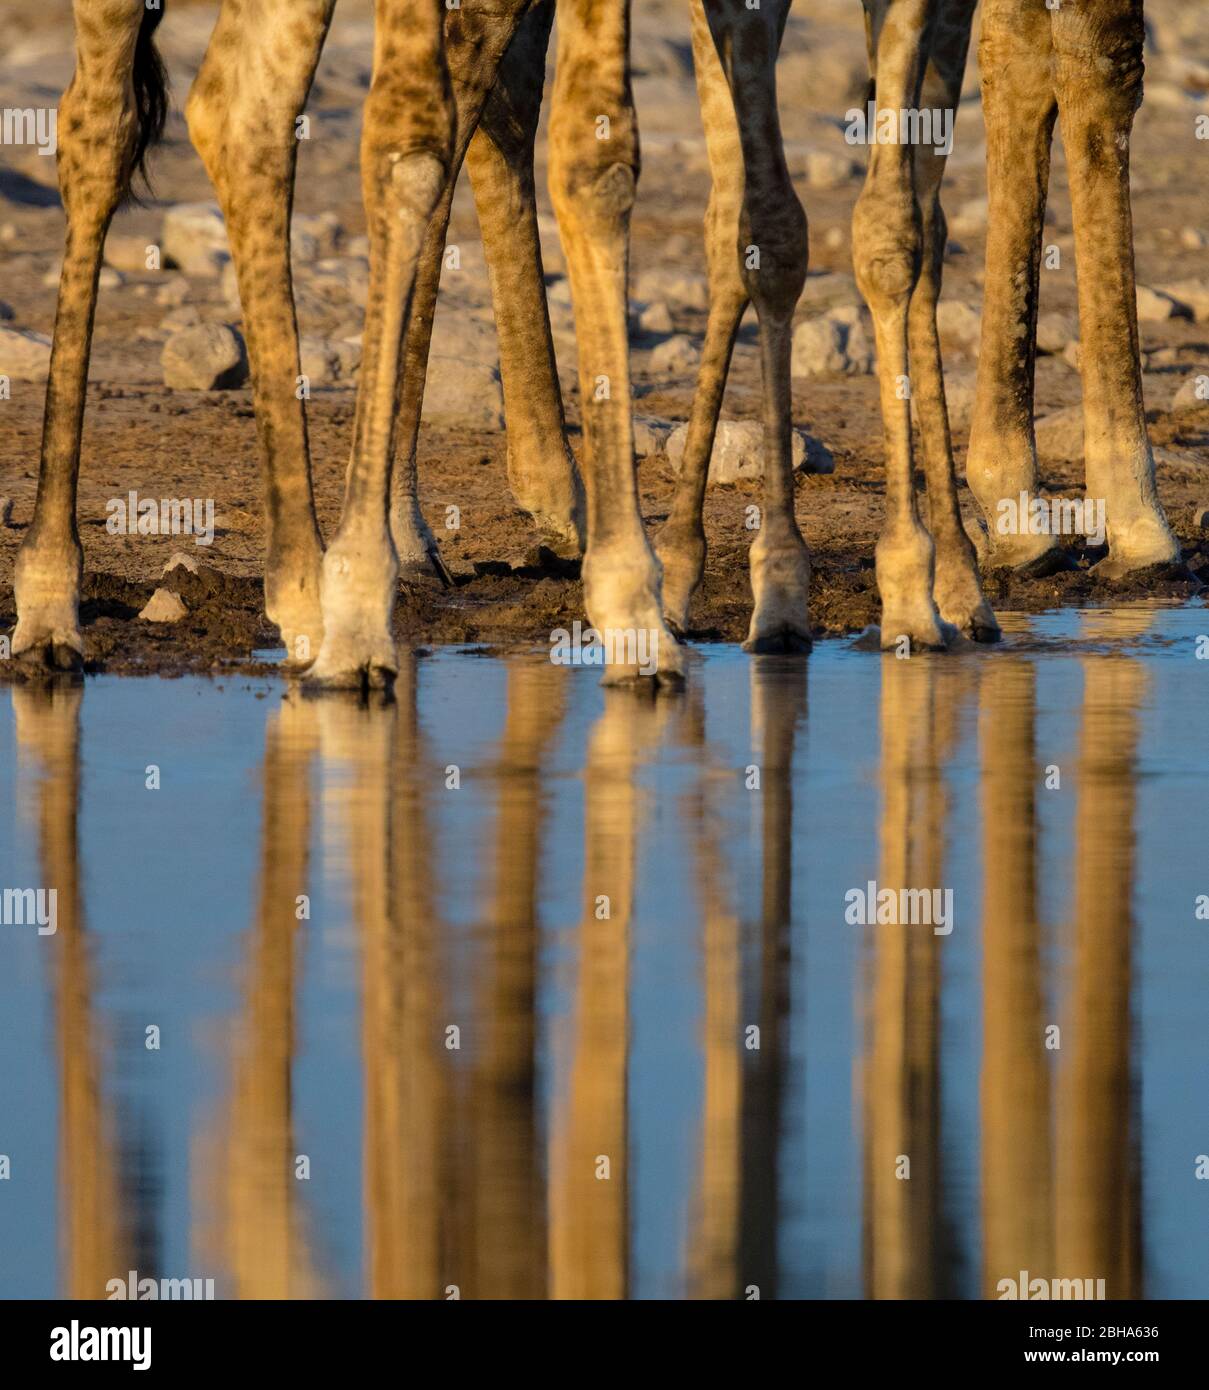 Legs of Southern giraffes reflecting in water, Etosha National Park, Namibia Stock Photo